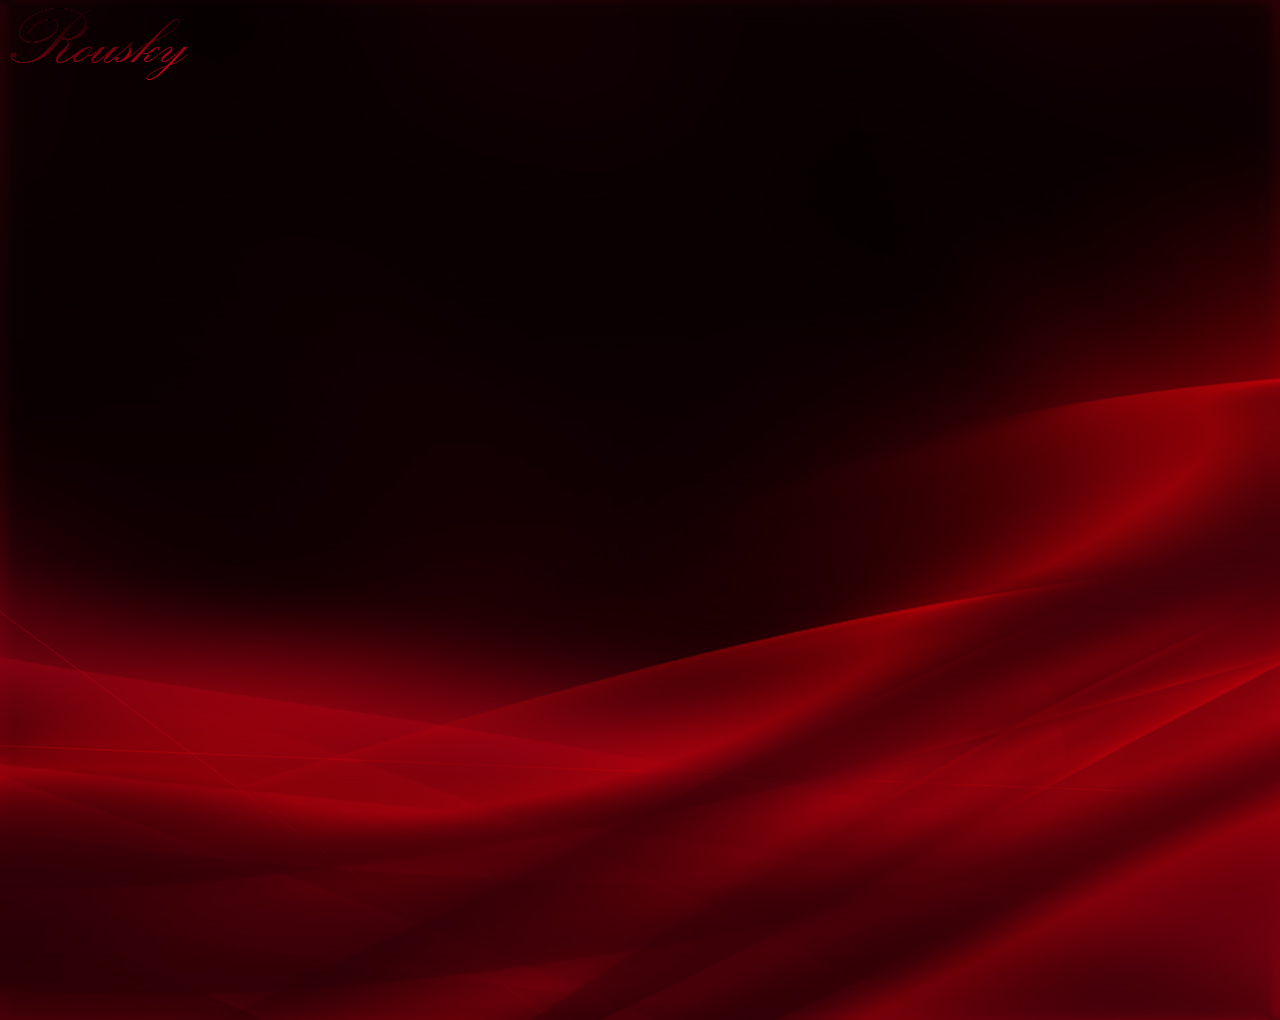 49+] Dark Red Abstract Wallpaper - WallpaperSafari